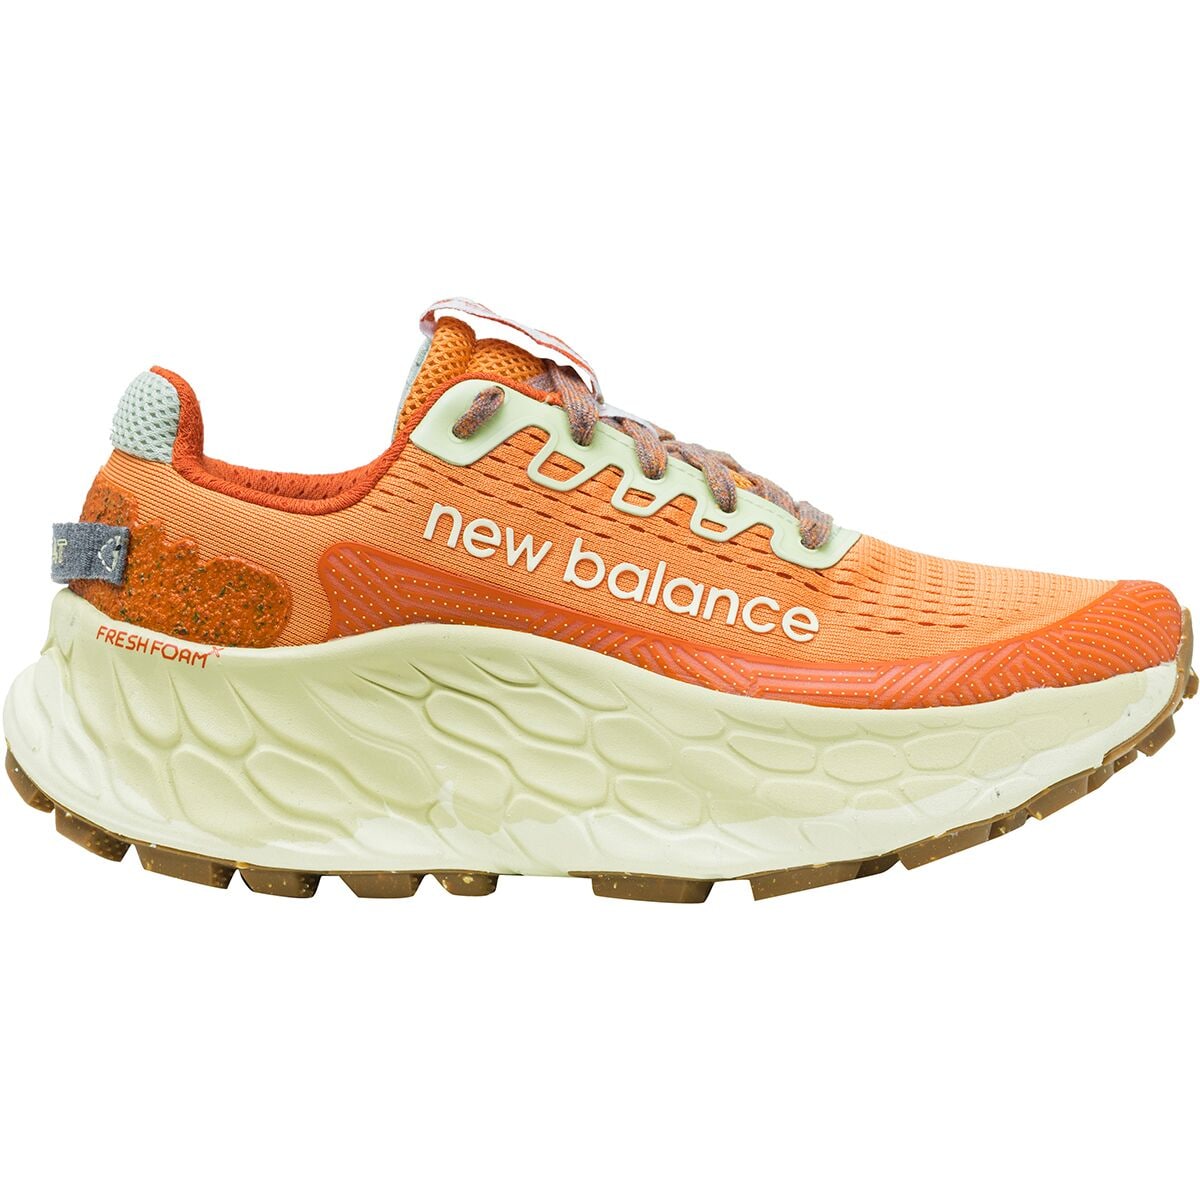 New Balance Fresh Foam x More Trail v3 Running Shoe - Women's